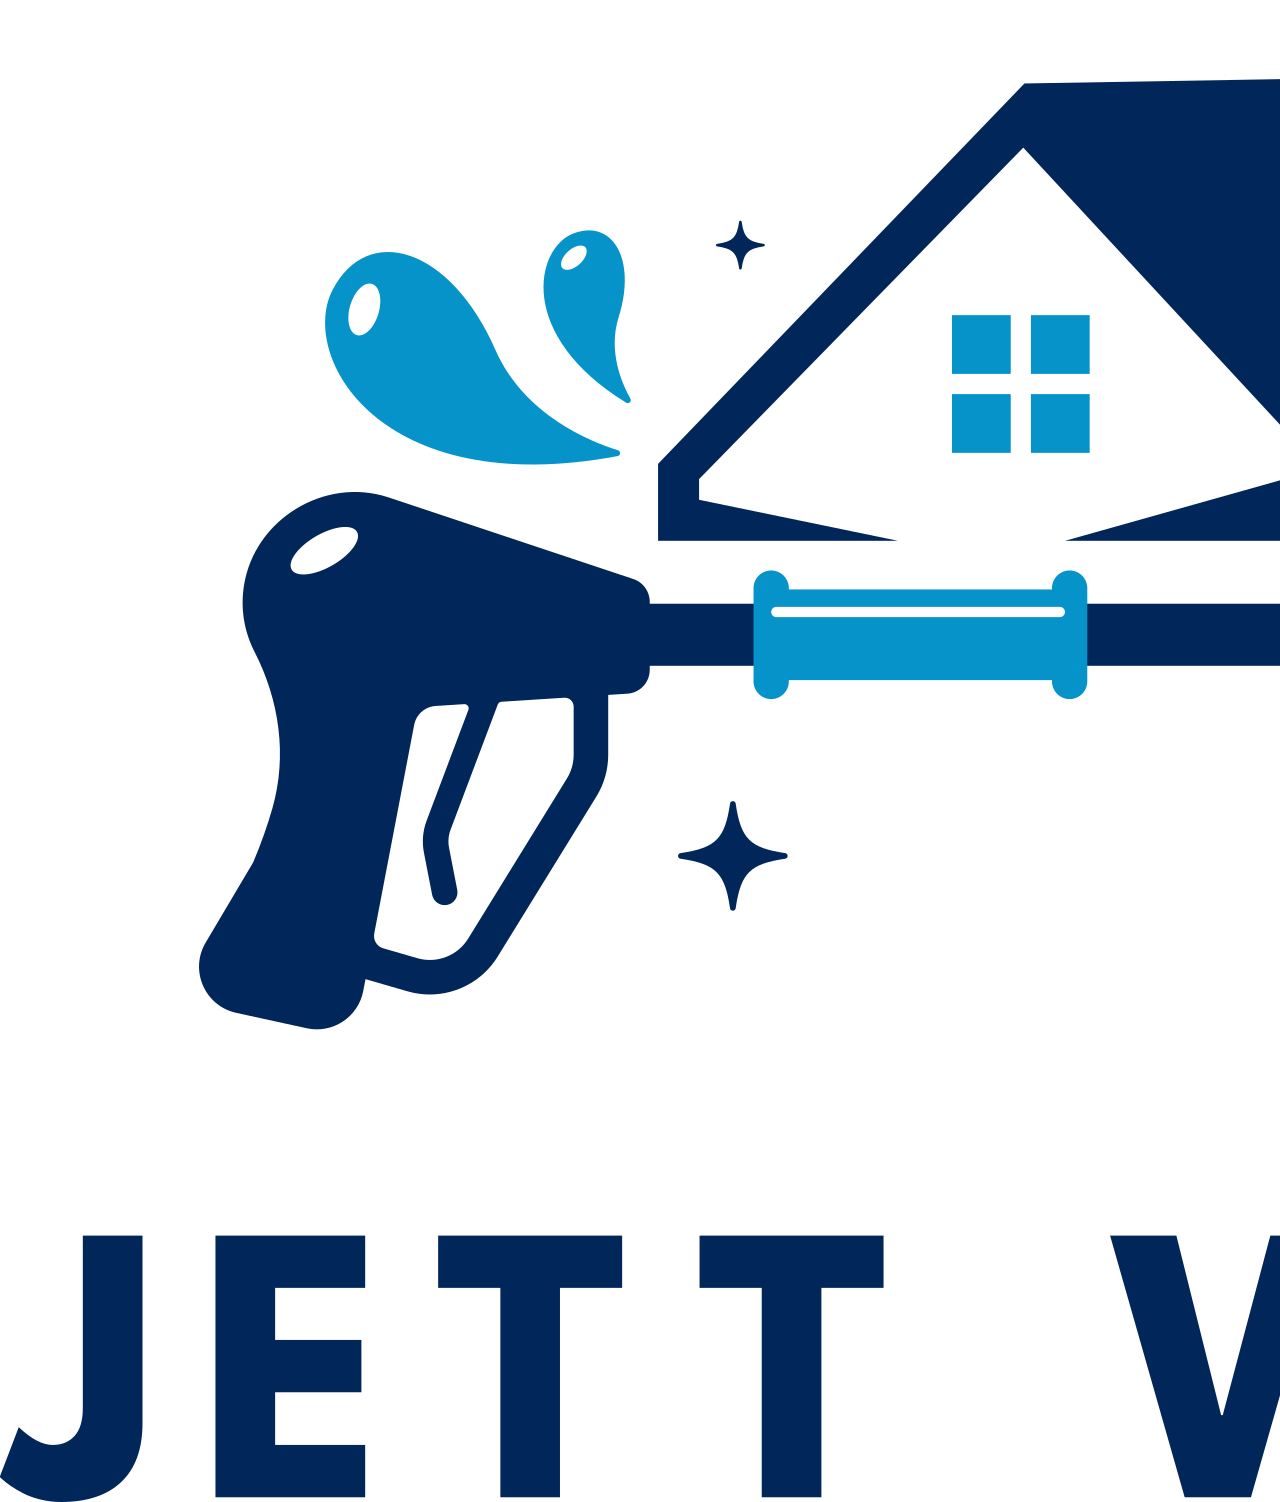 Jett wash 's logo